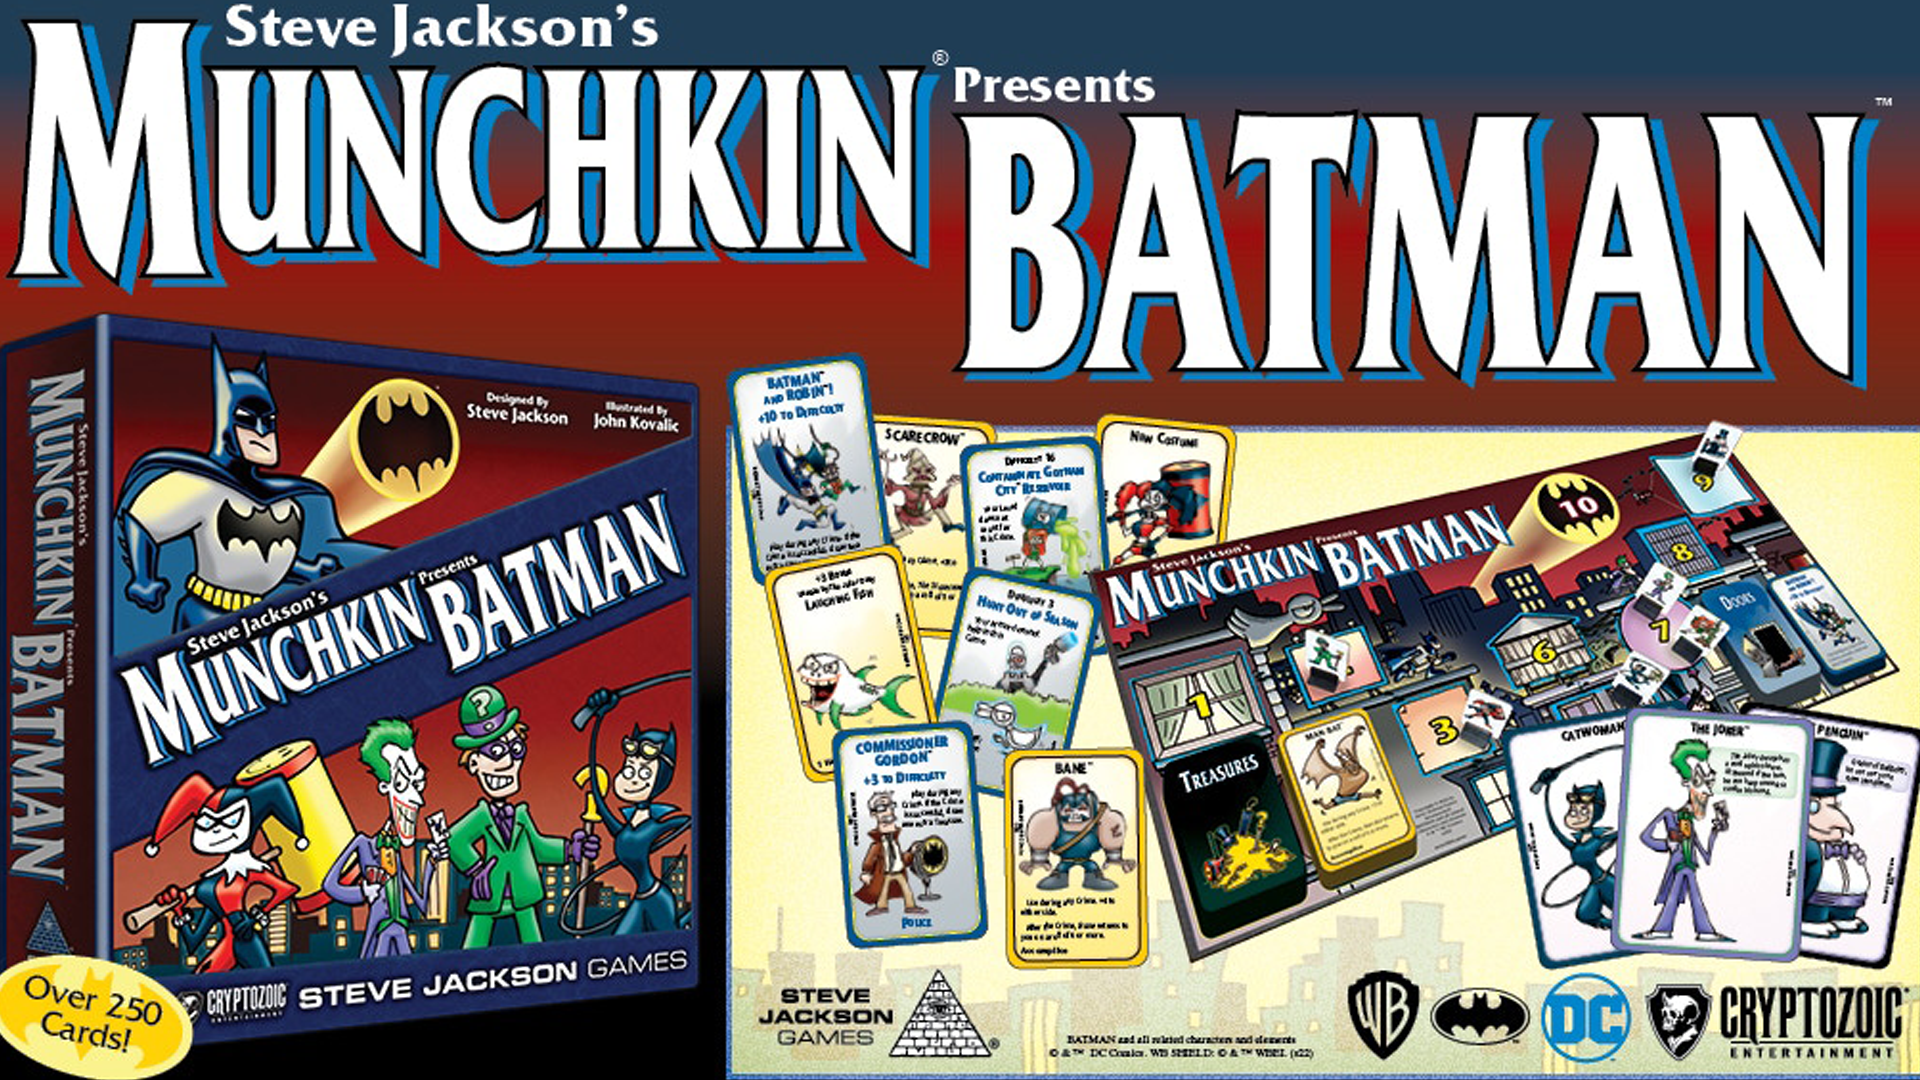 Munchkin Presents Batman promo image